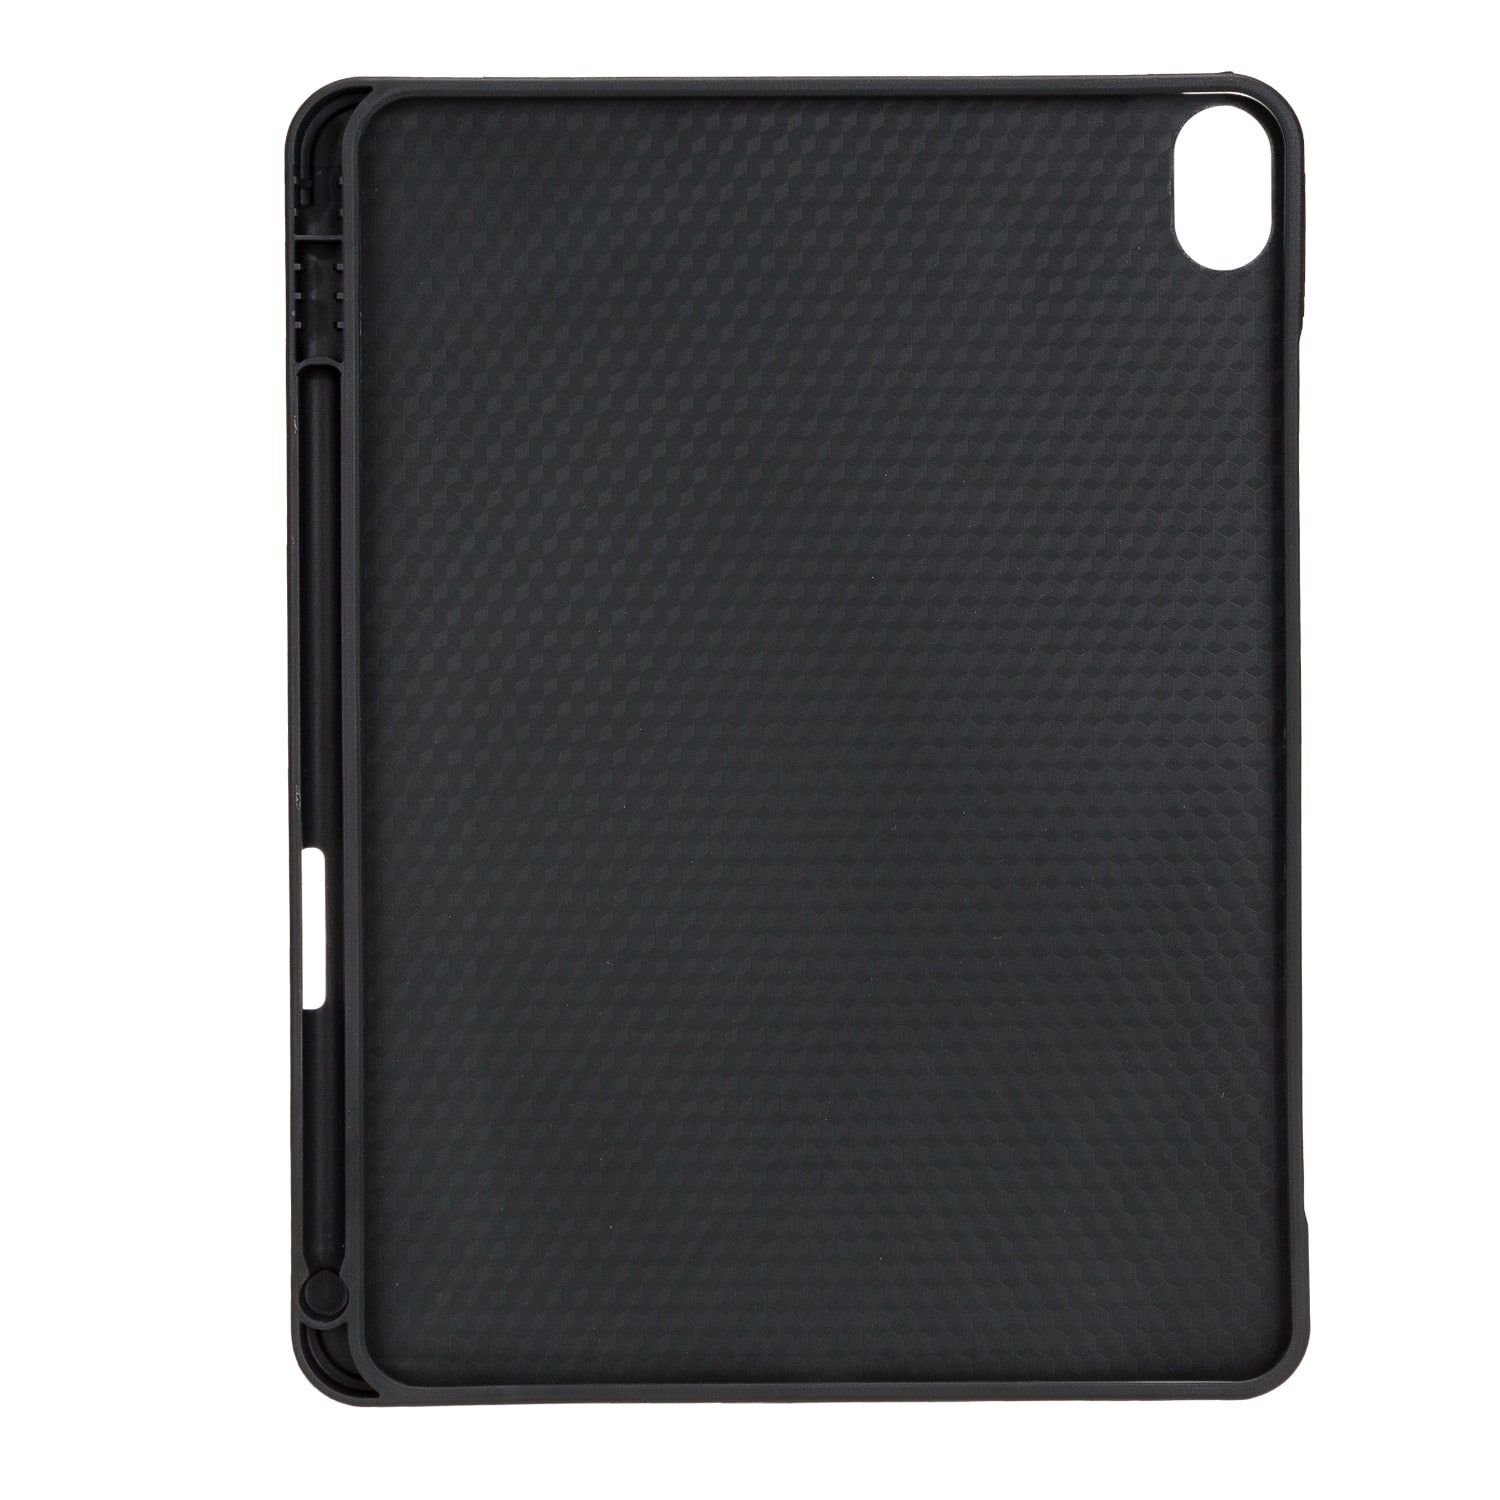 Black Leather iPad Air 10.9 Inc Smart Folio Case with Apple Pen Holder - Bomonti - 6